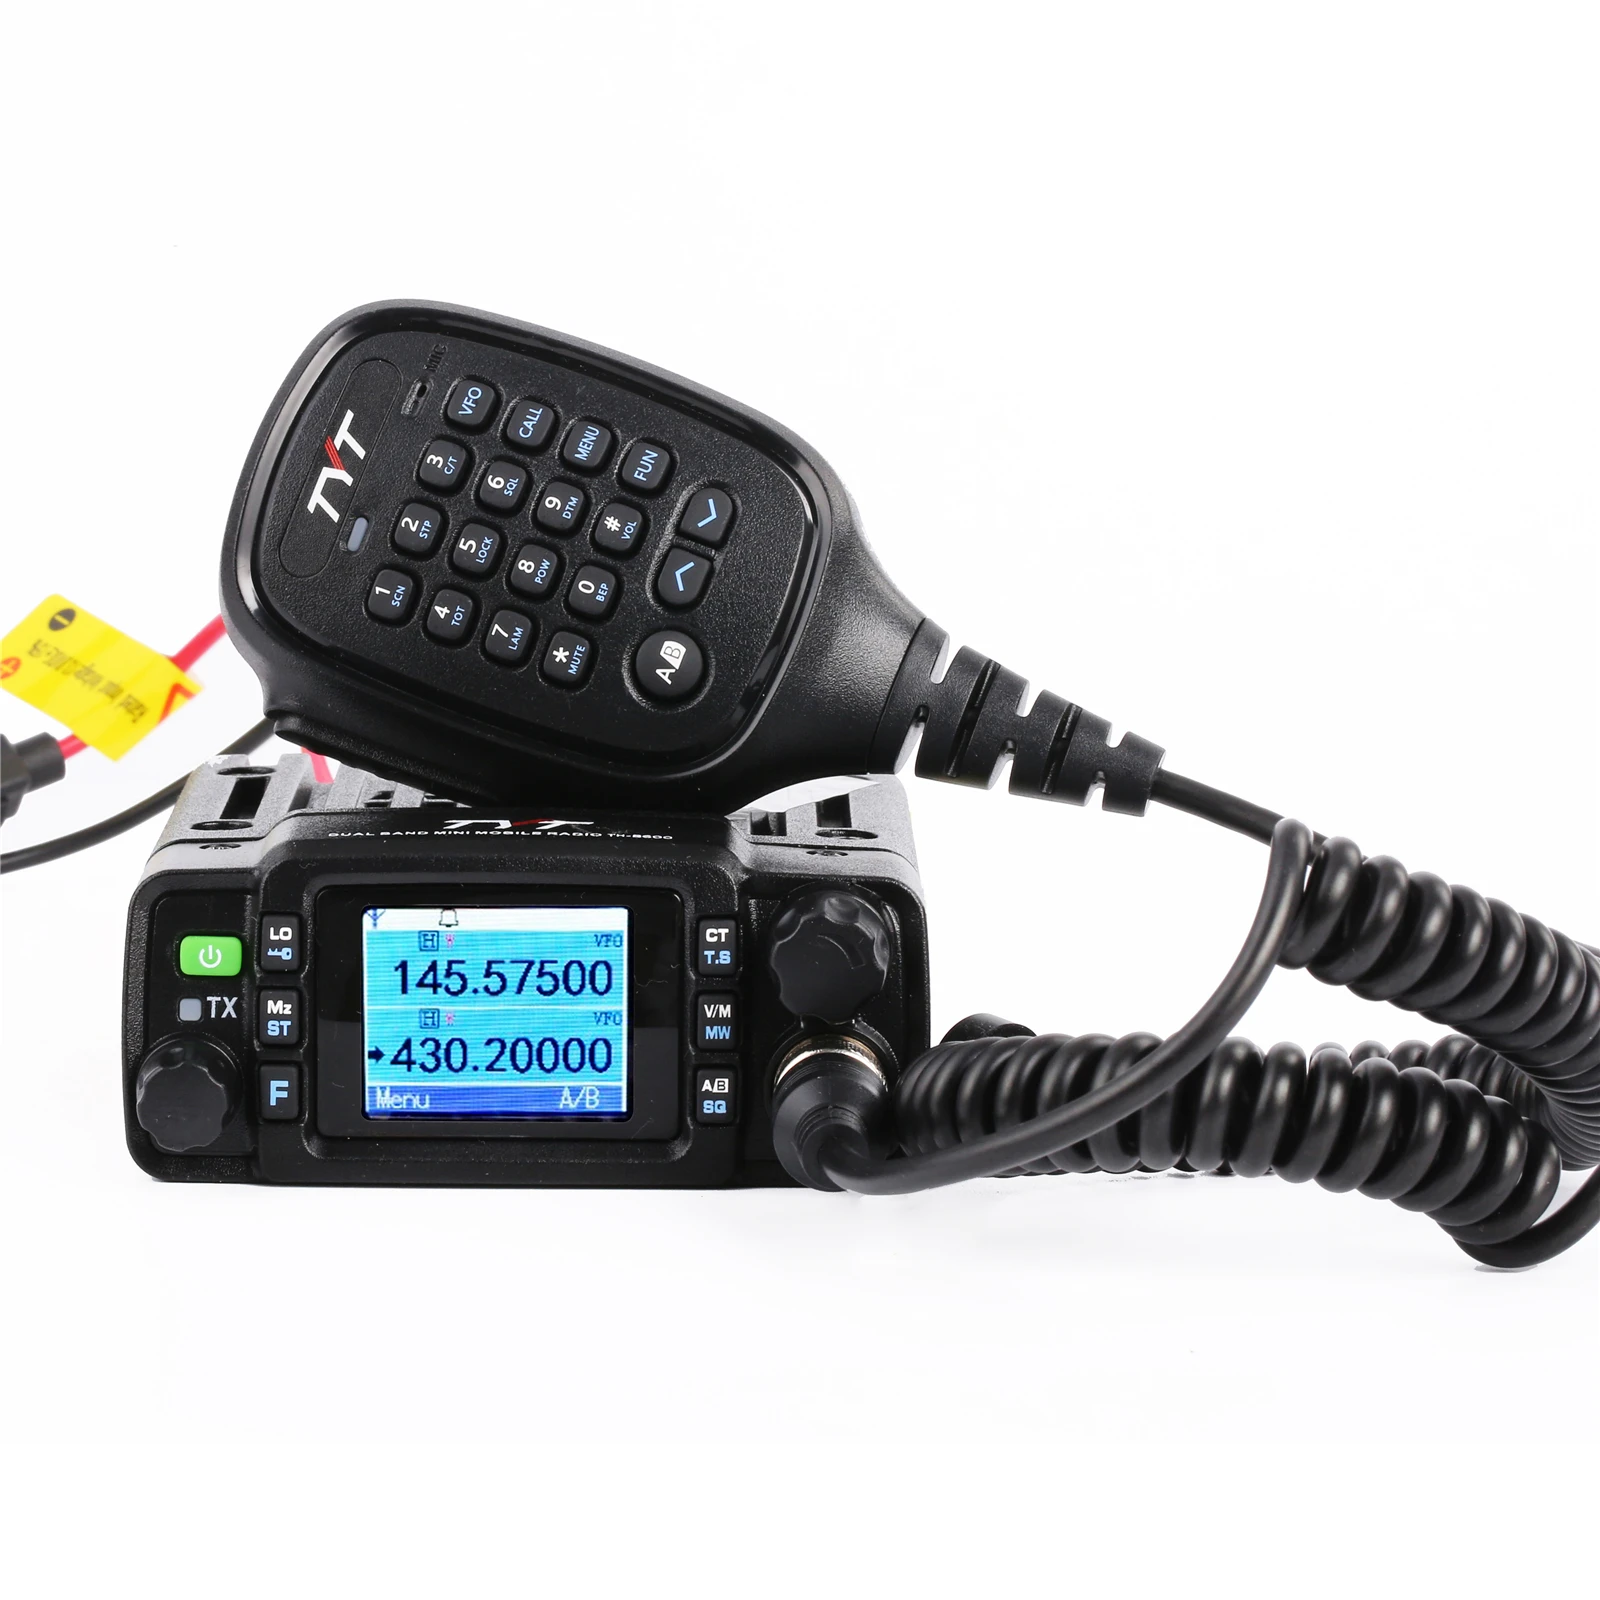 

TYT Mini Mobile Radio 25 Watt TH-8600 Dual Band Base two way Walkie Talkie Ham Radio Communicator Radio Station